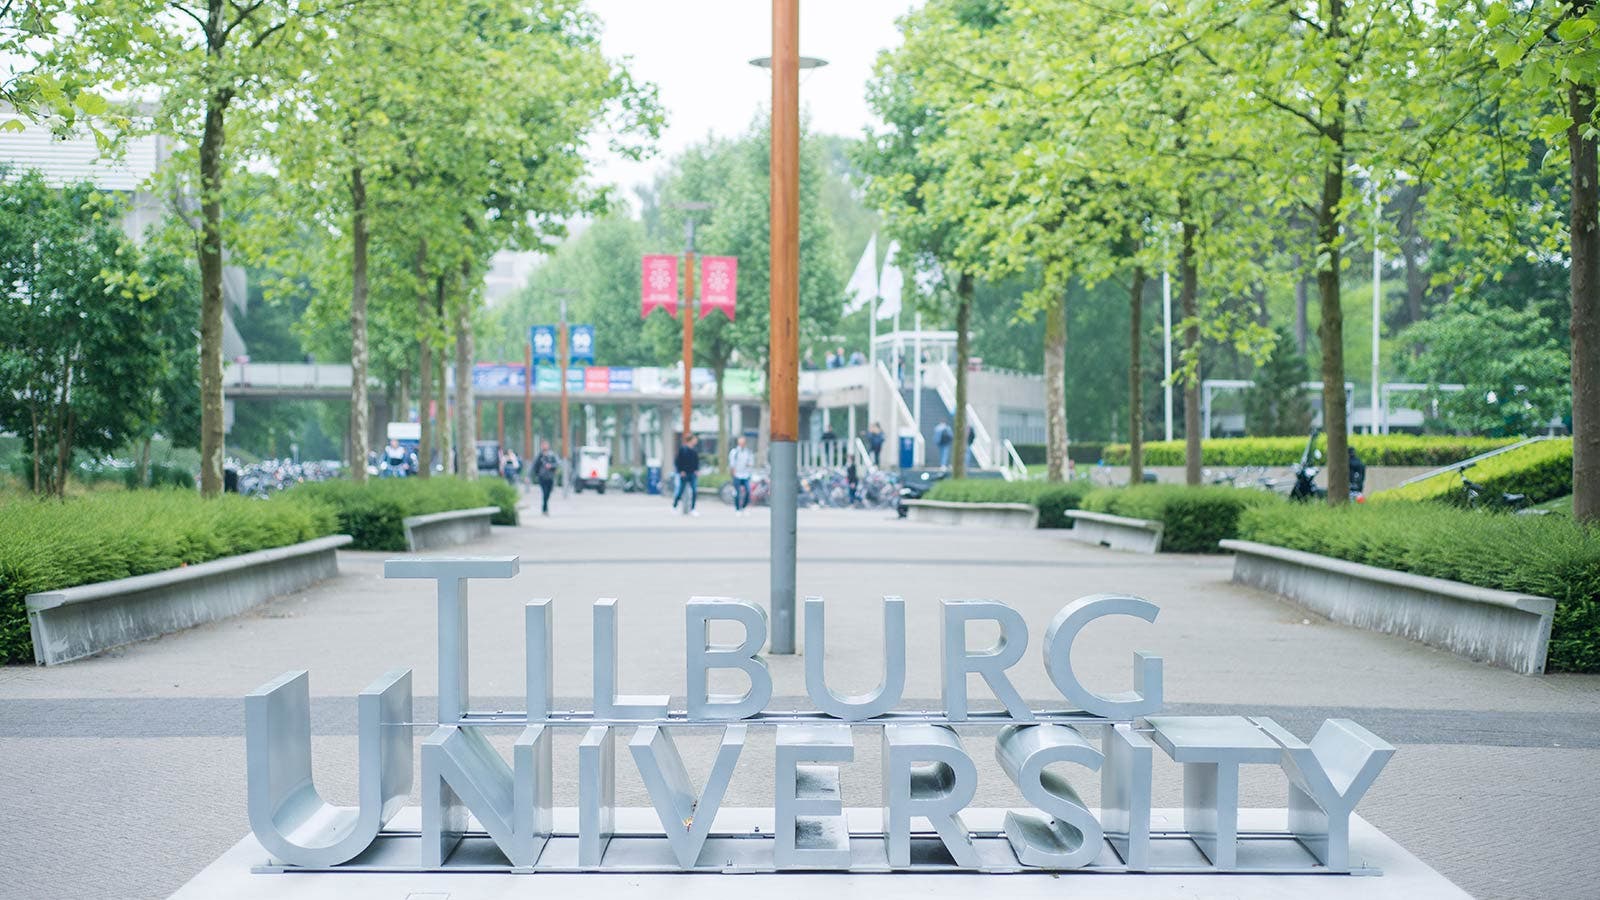 Tilburg University's sign on campus.